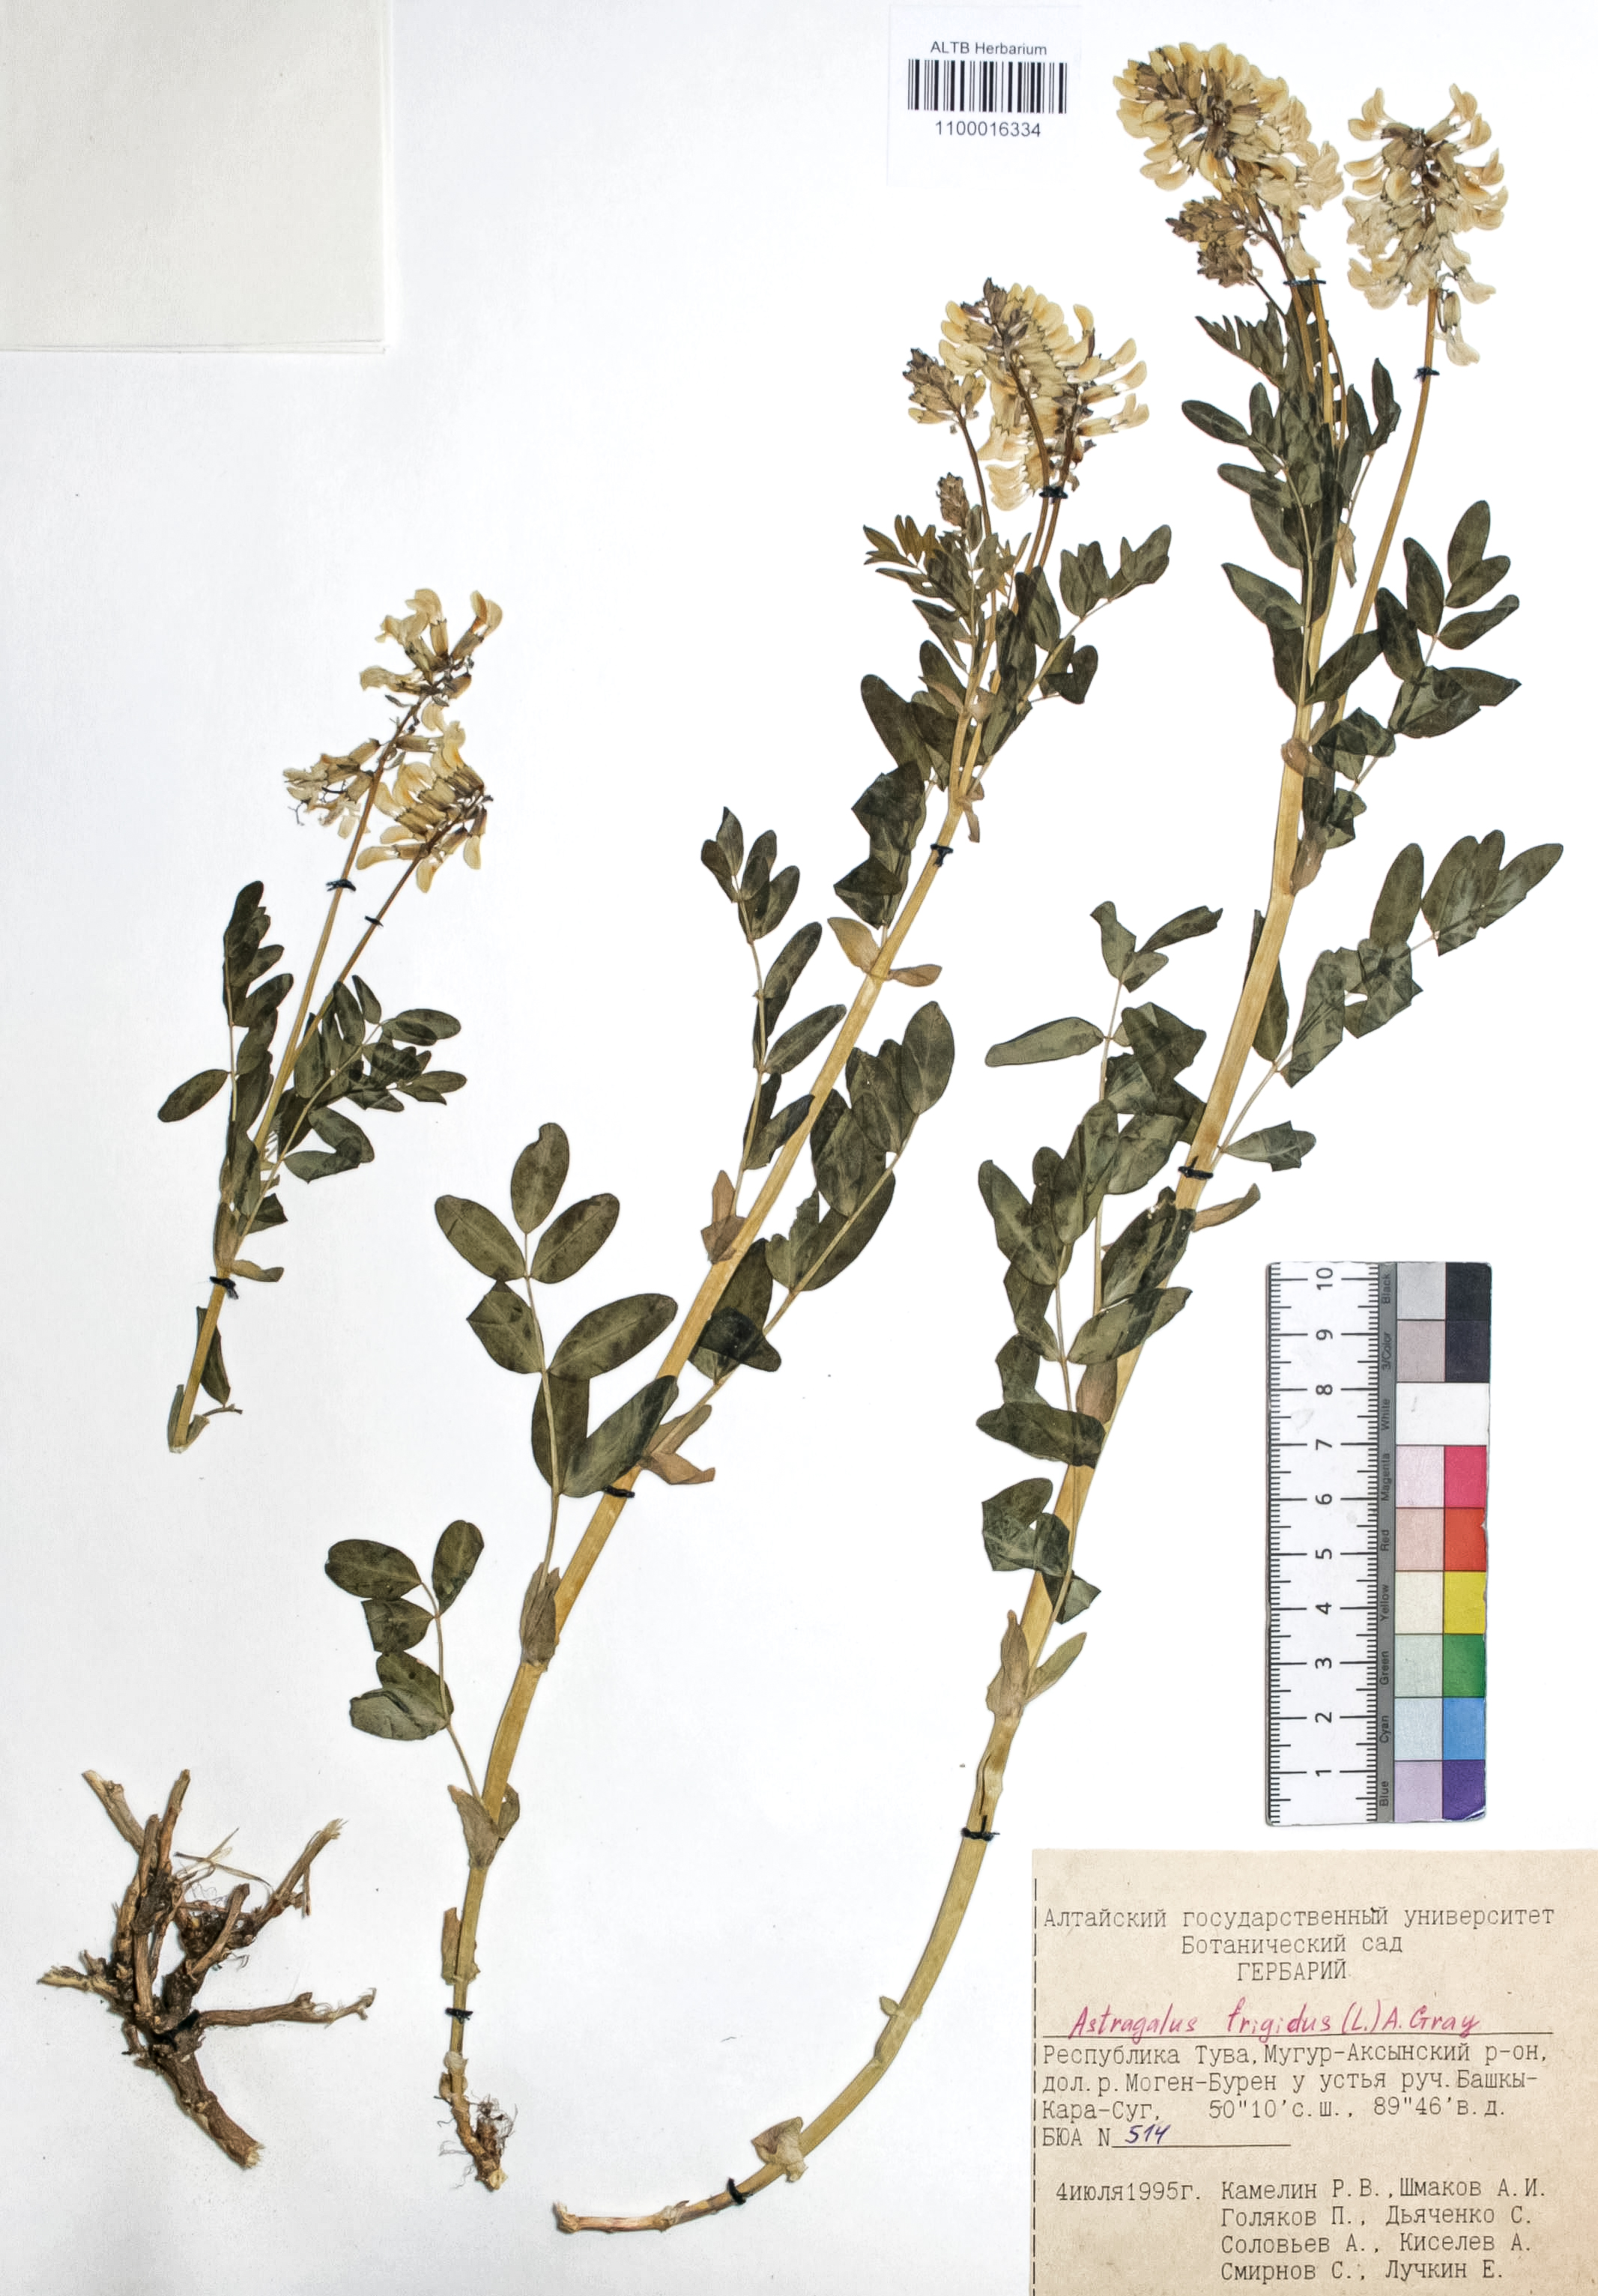 Astragalus frigidus (L.) A. Gray